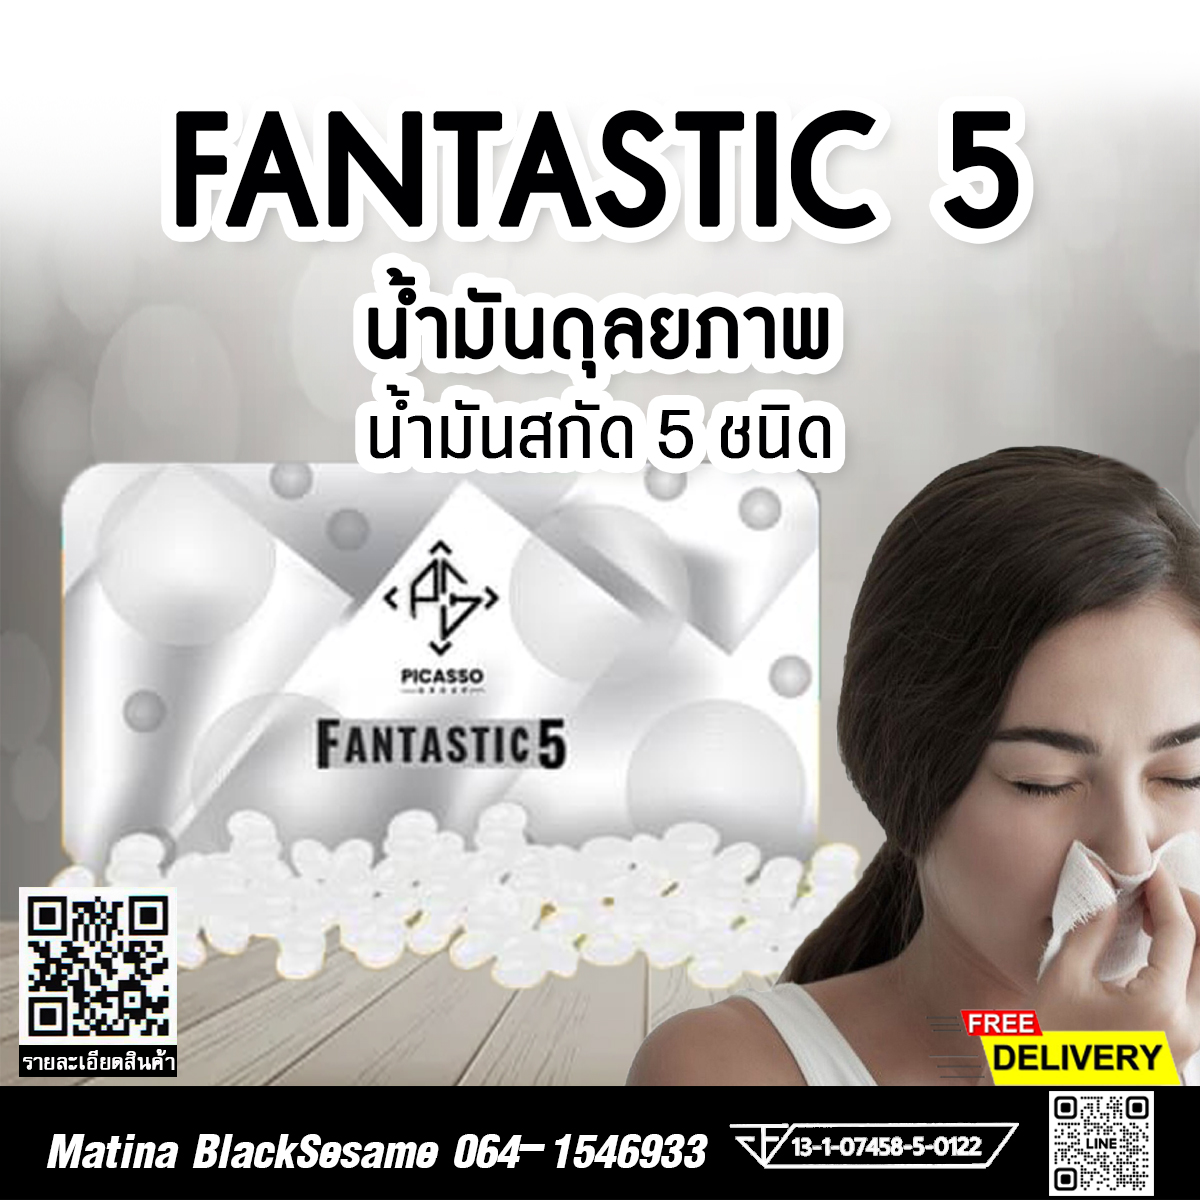 Fantastic5(F5) แฟนทาสติก ออยด์ น้ำมันดุลยภาพ 5 ชนิด